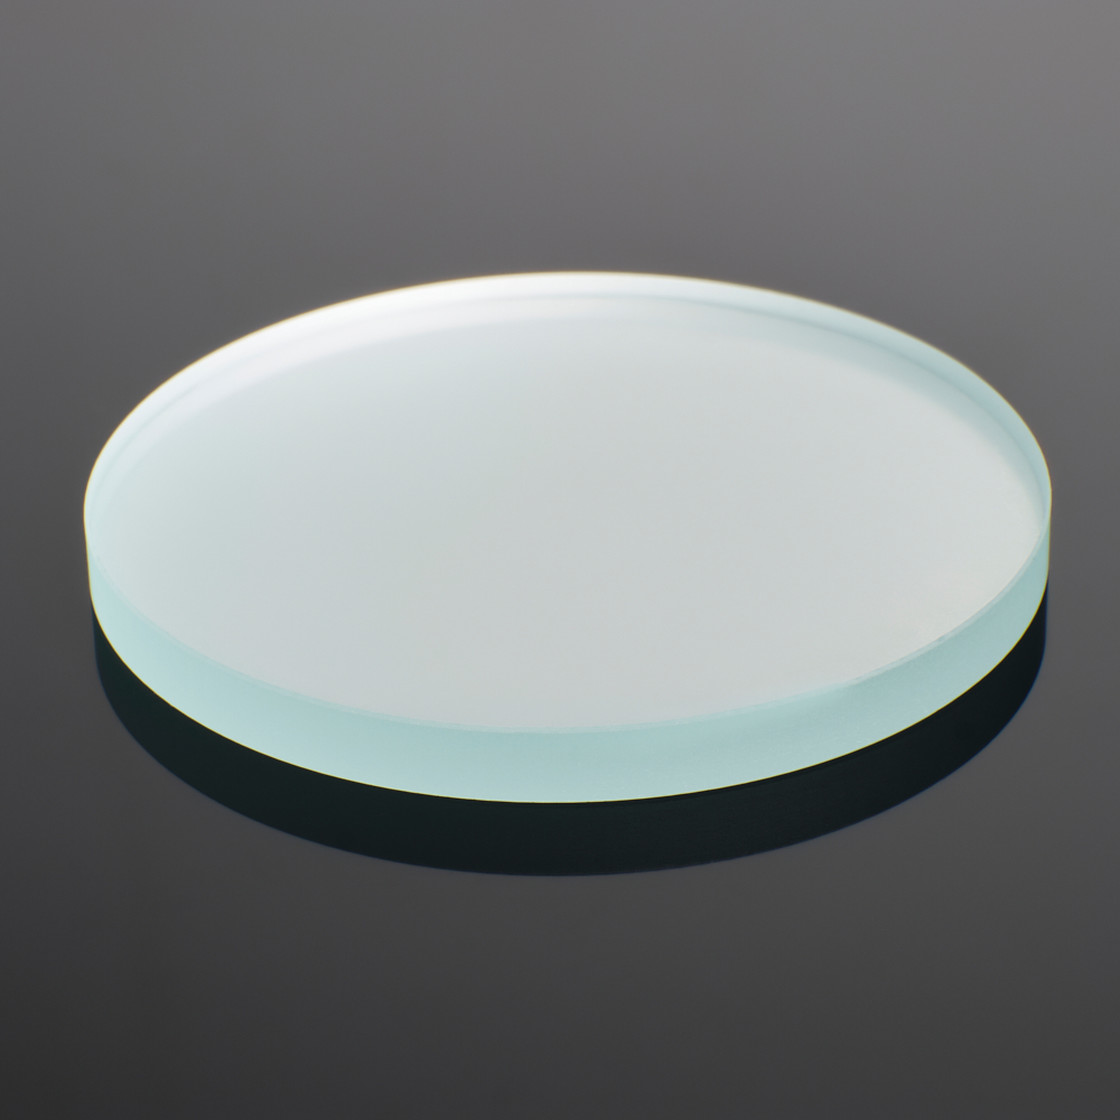 Spherical concave mirror Ø 70 mm f 450.0 mm